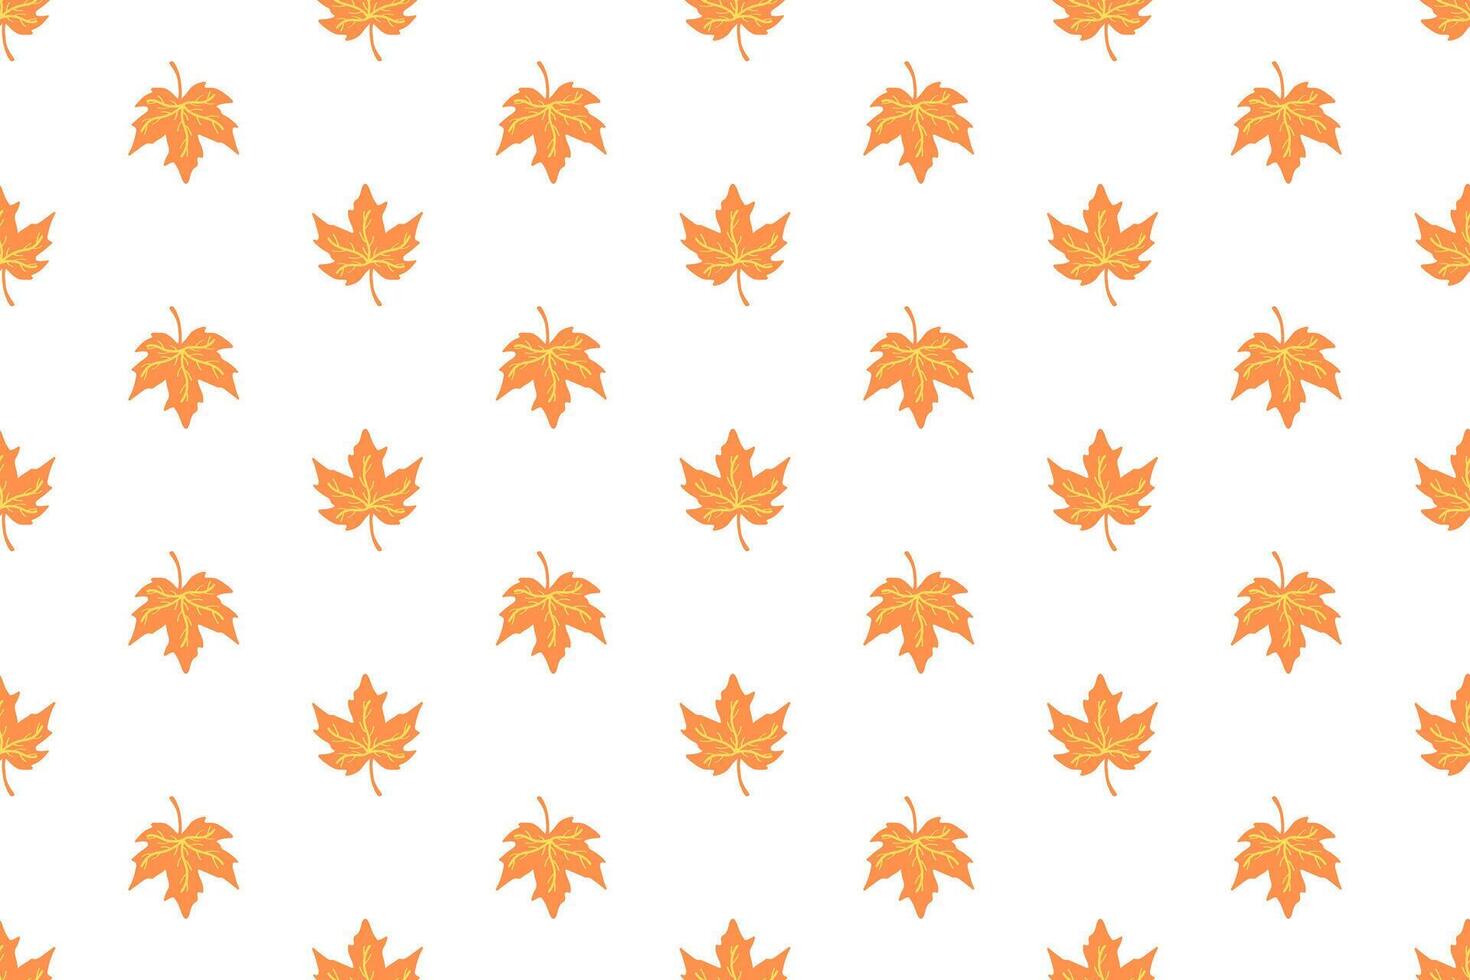 Pattern design with leaf motif vector